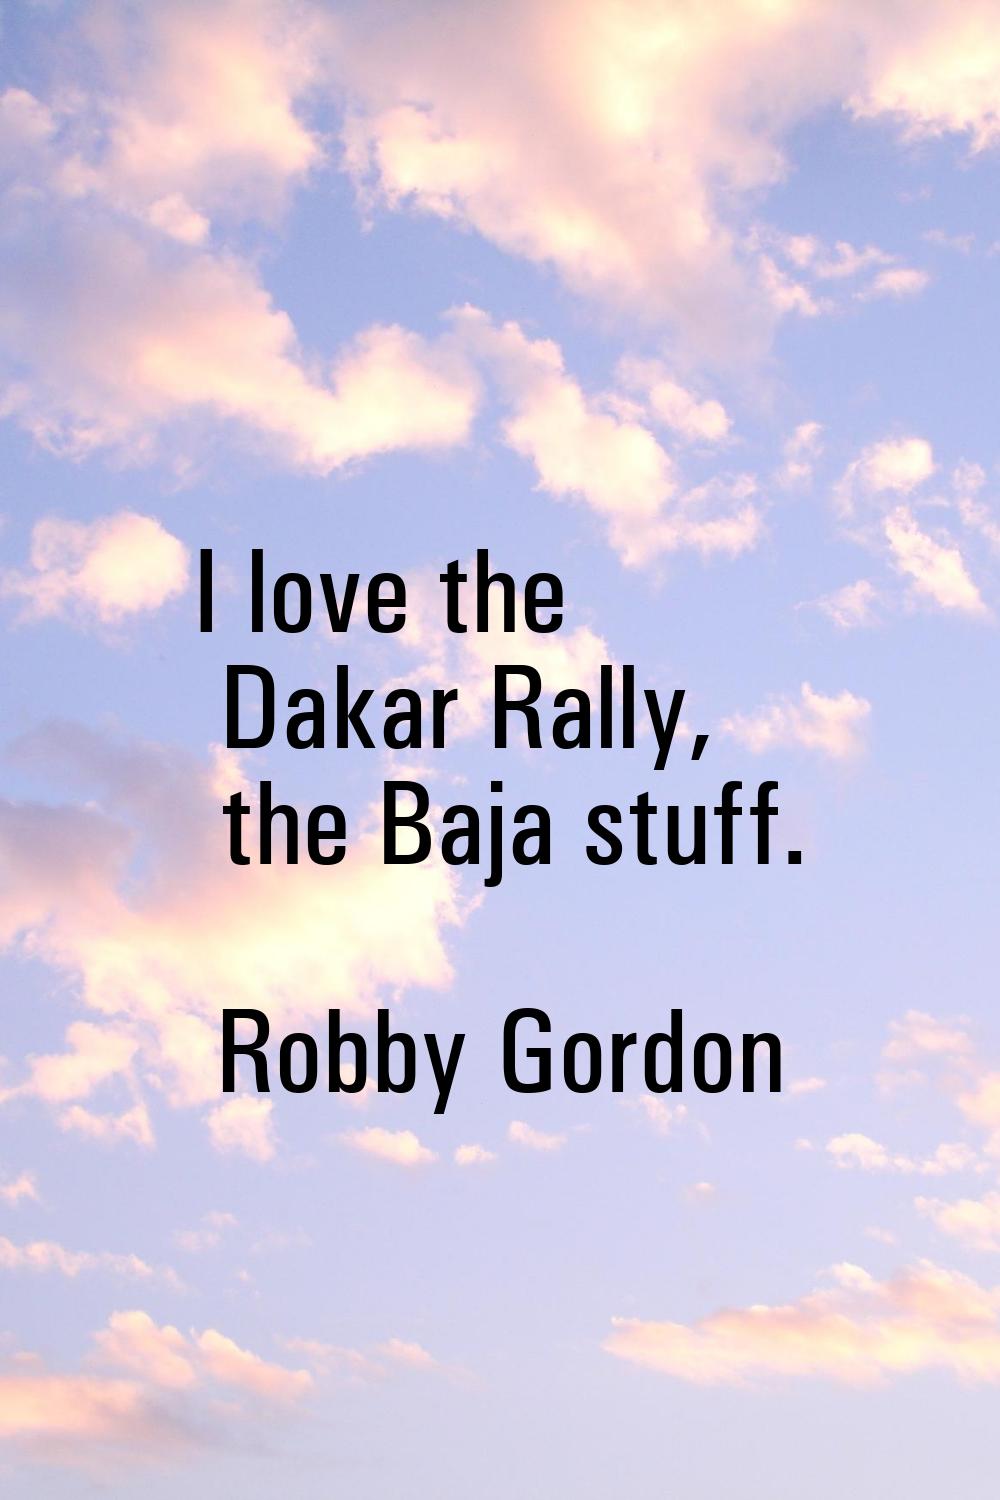 I love the Dakar Rally, the Baja stuff.